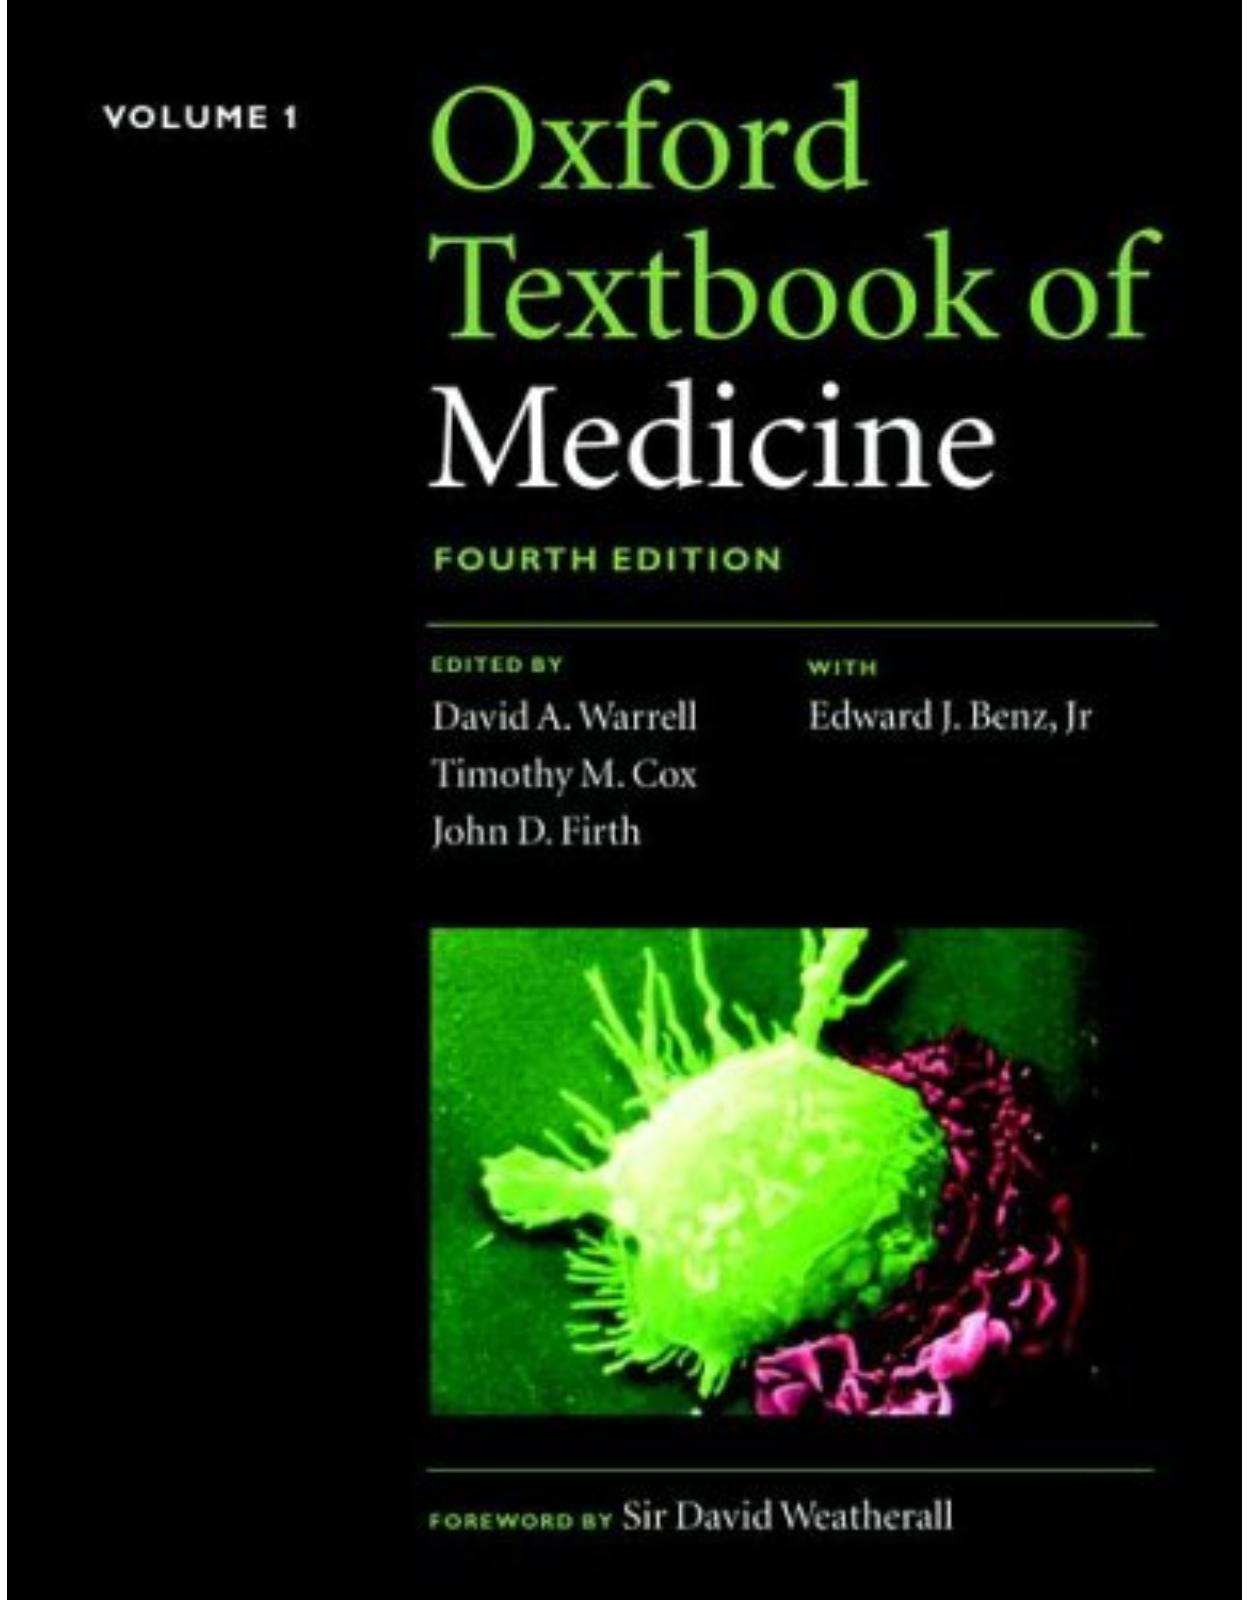 Oxford Textbook of Medicine